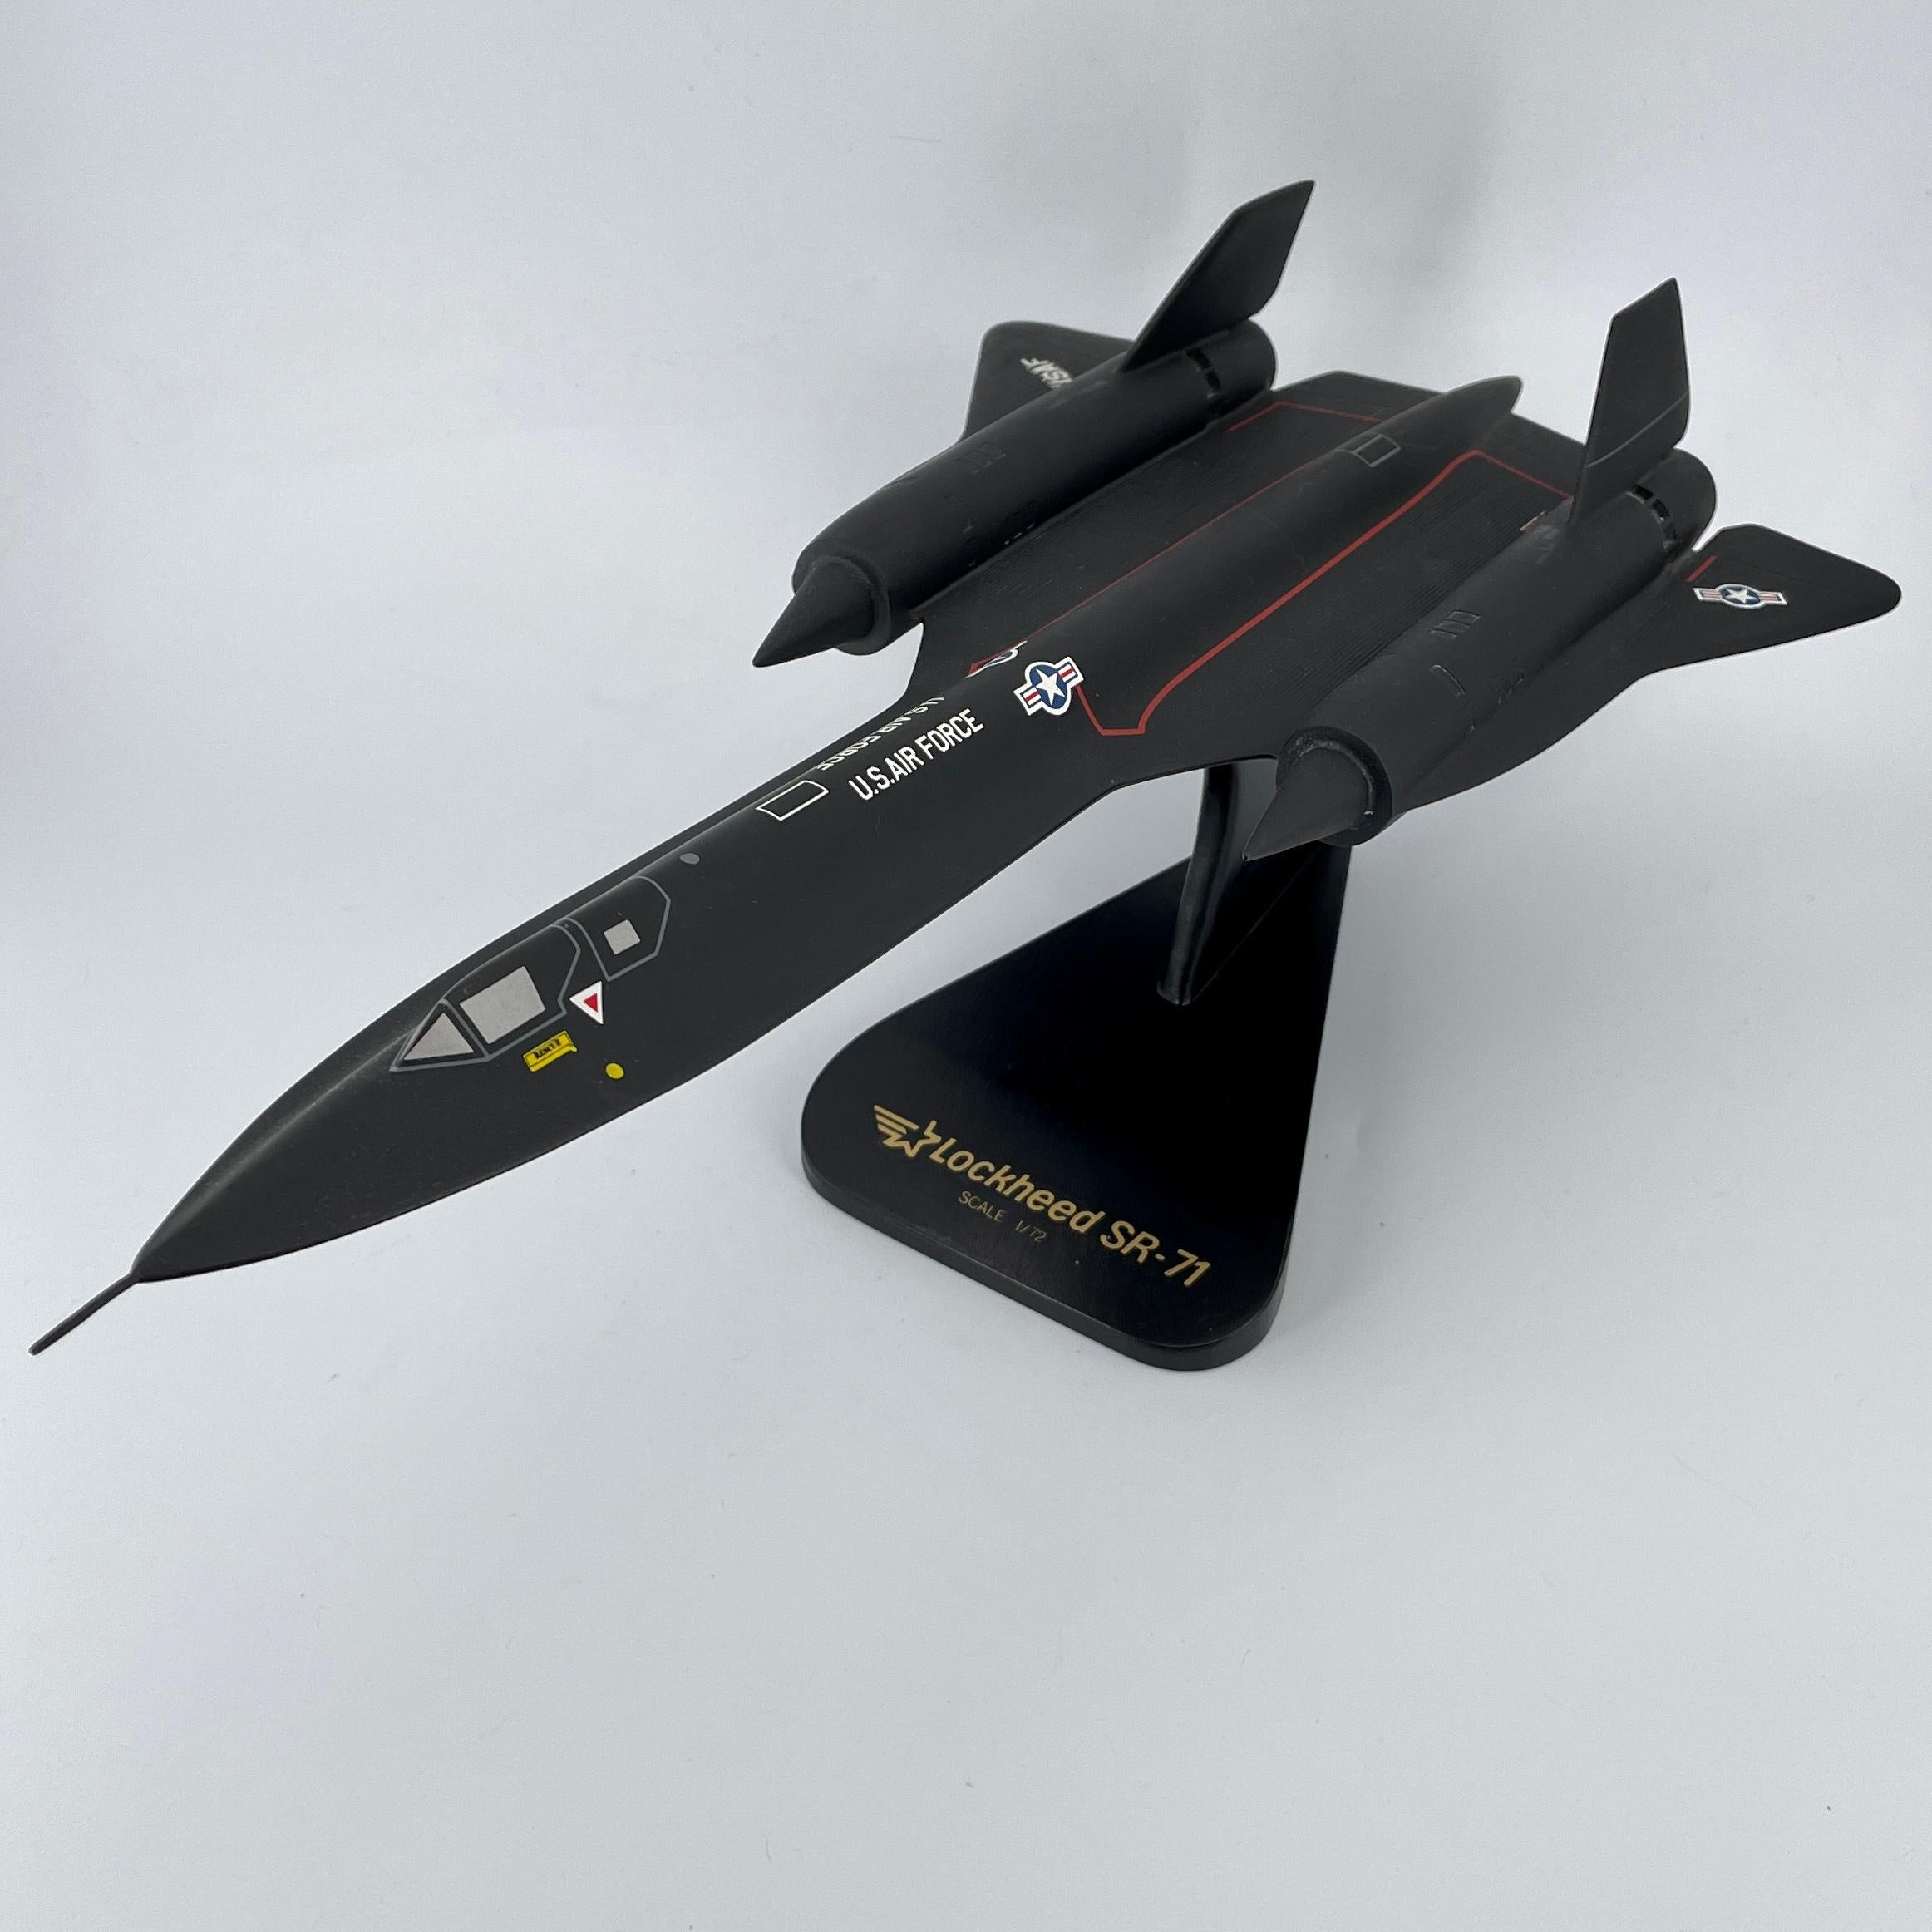 sr-71 blackbird price